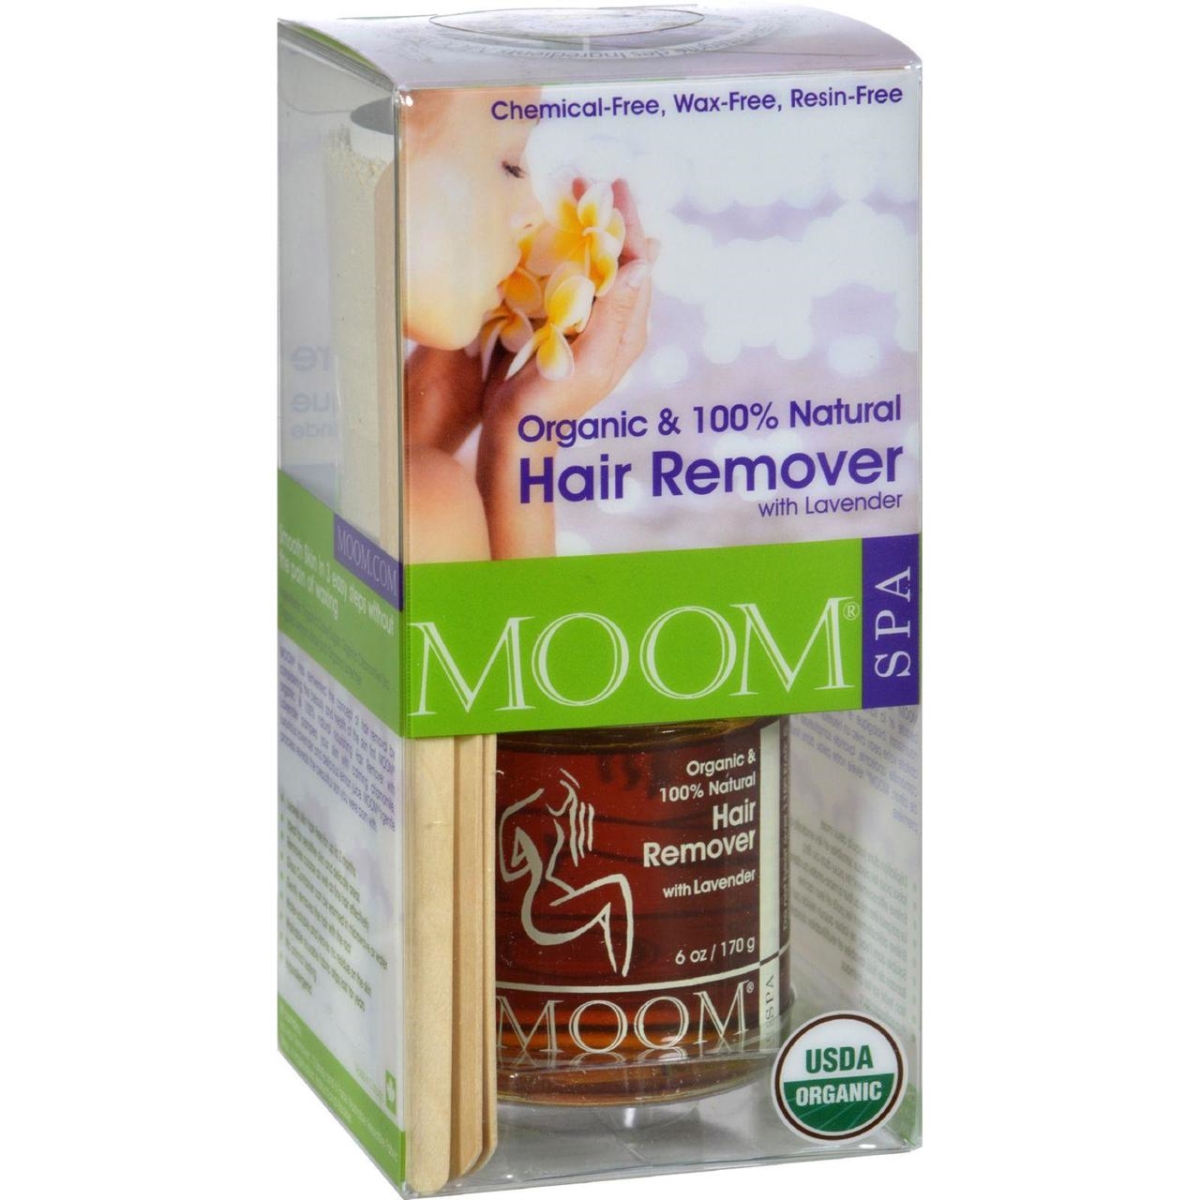 Hg0825653 Organic Hair Removal Kit With Lavender Spa Formula - 1 Kit